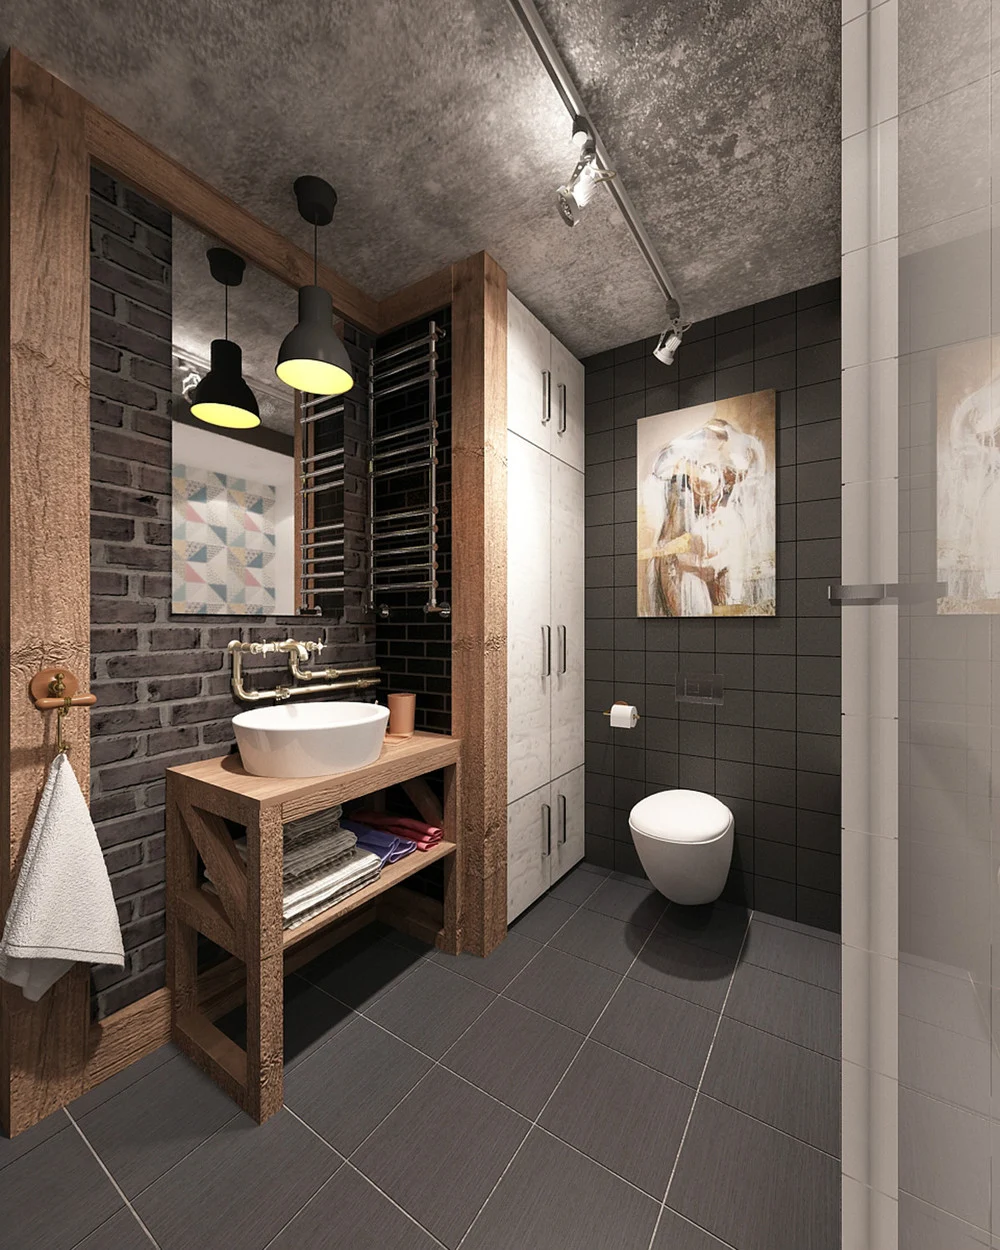 New Industrial Design Bathroom Inspirational